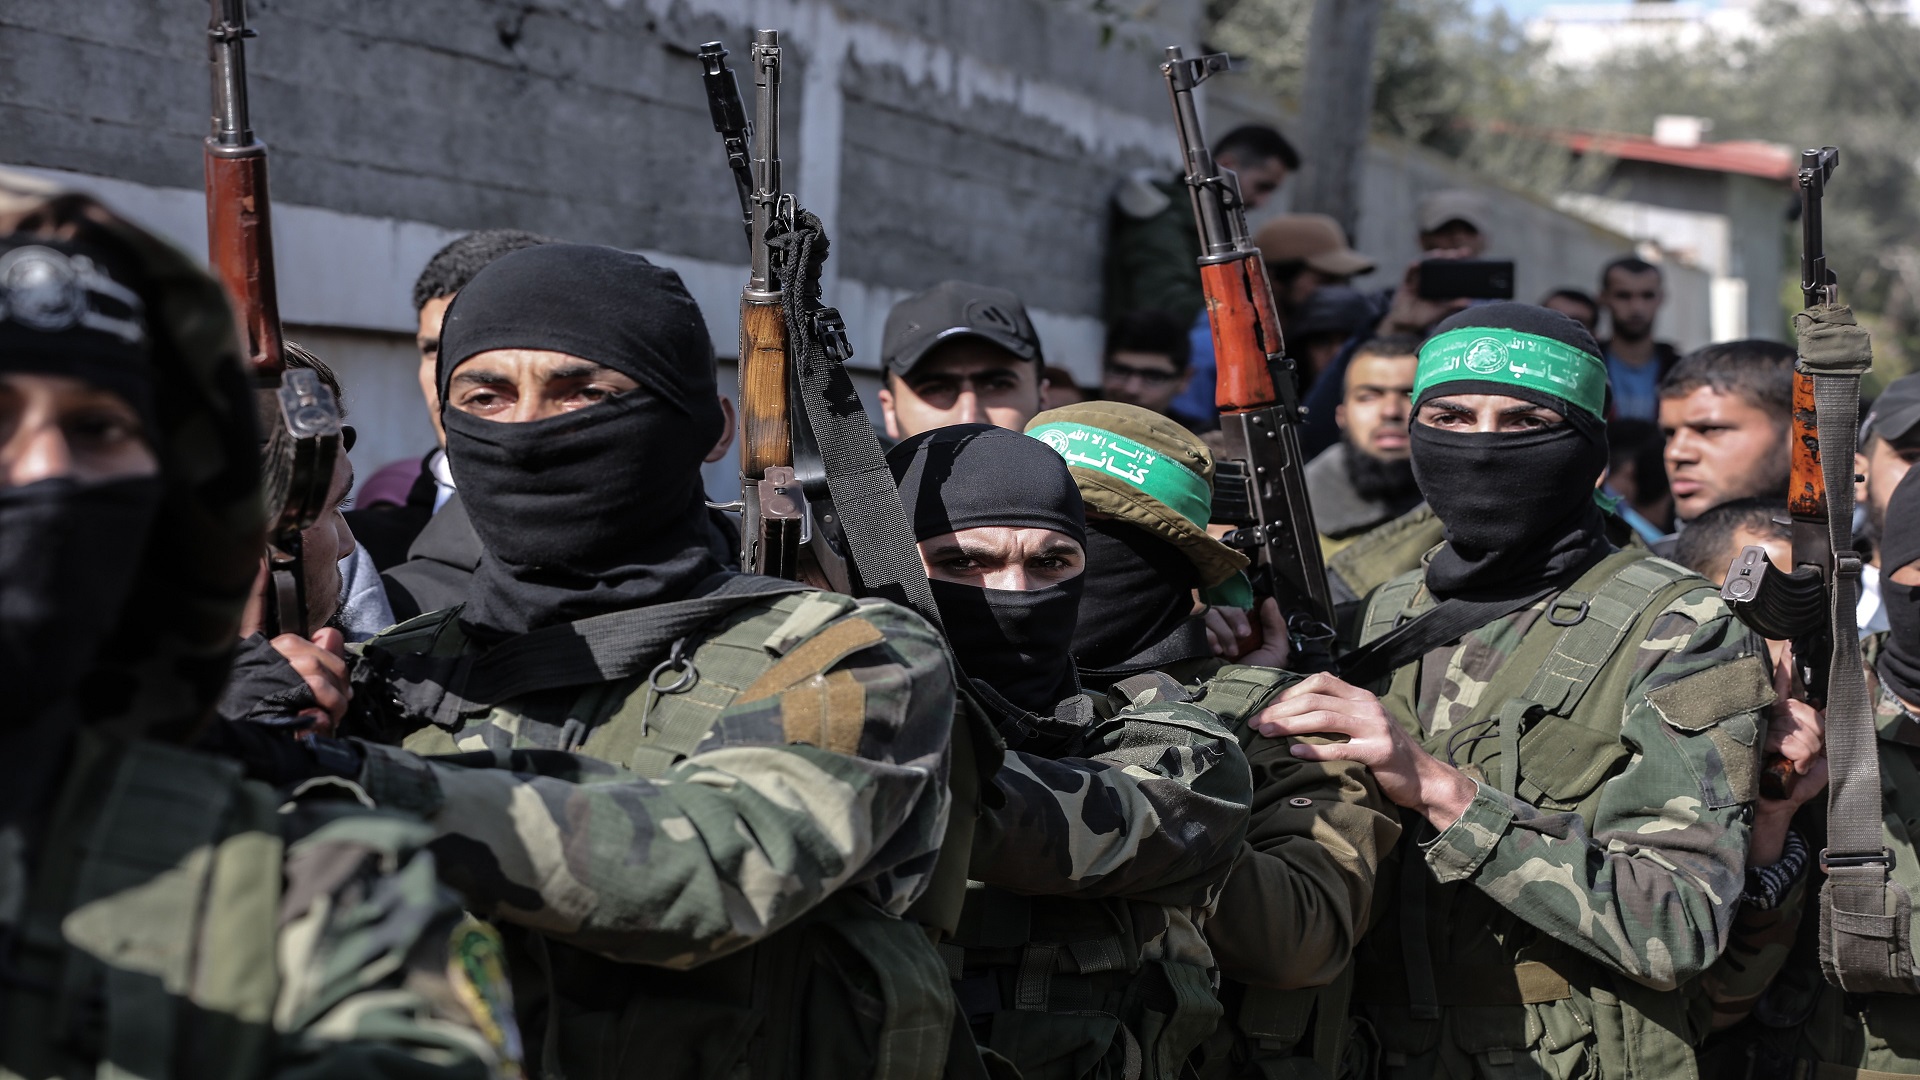 4 террористические организации. Аль-Каида ХАМАС. Вербовка в террористические организации. Политические террористы.